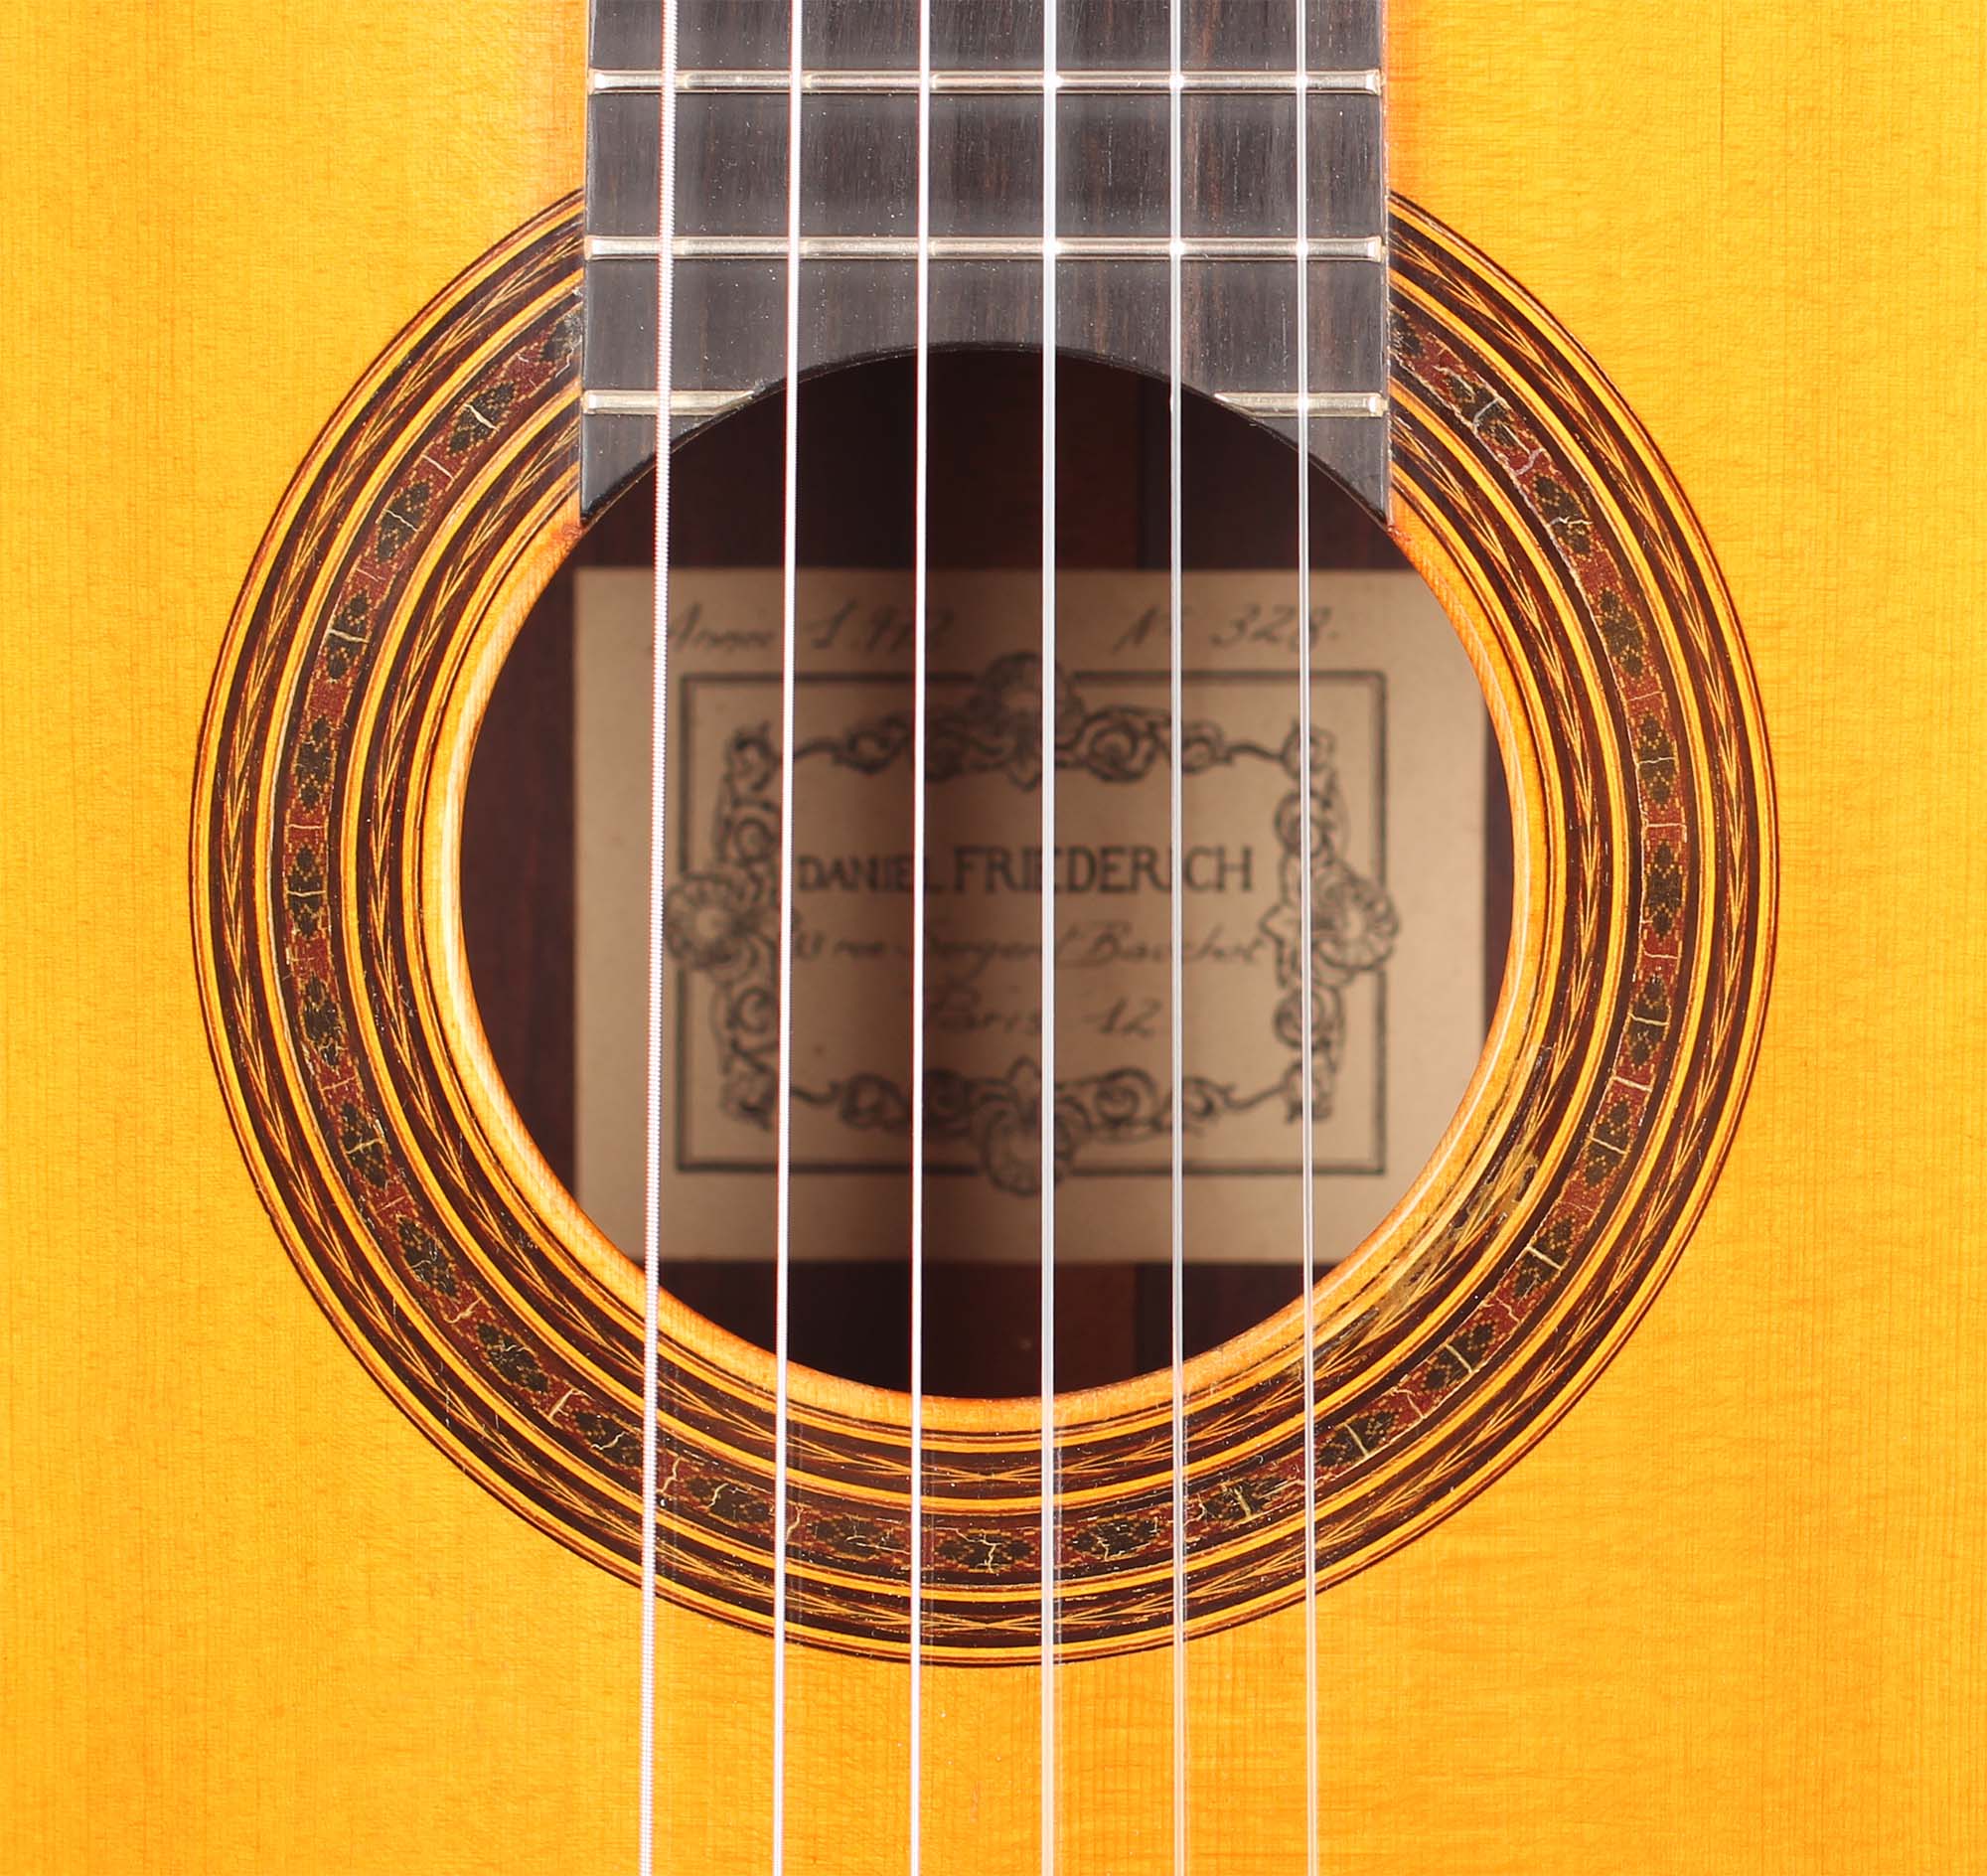 daniel friederich guitar 1972 13